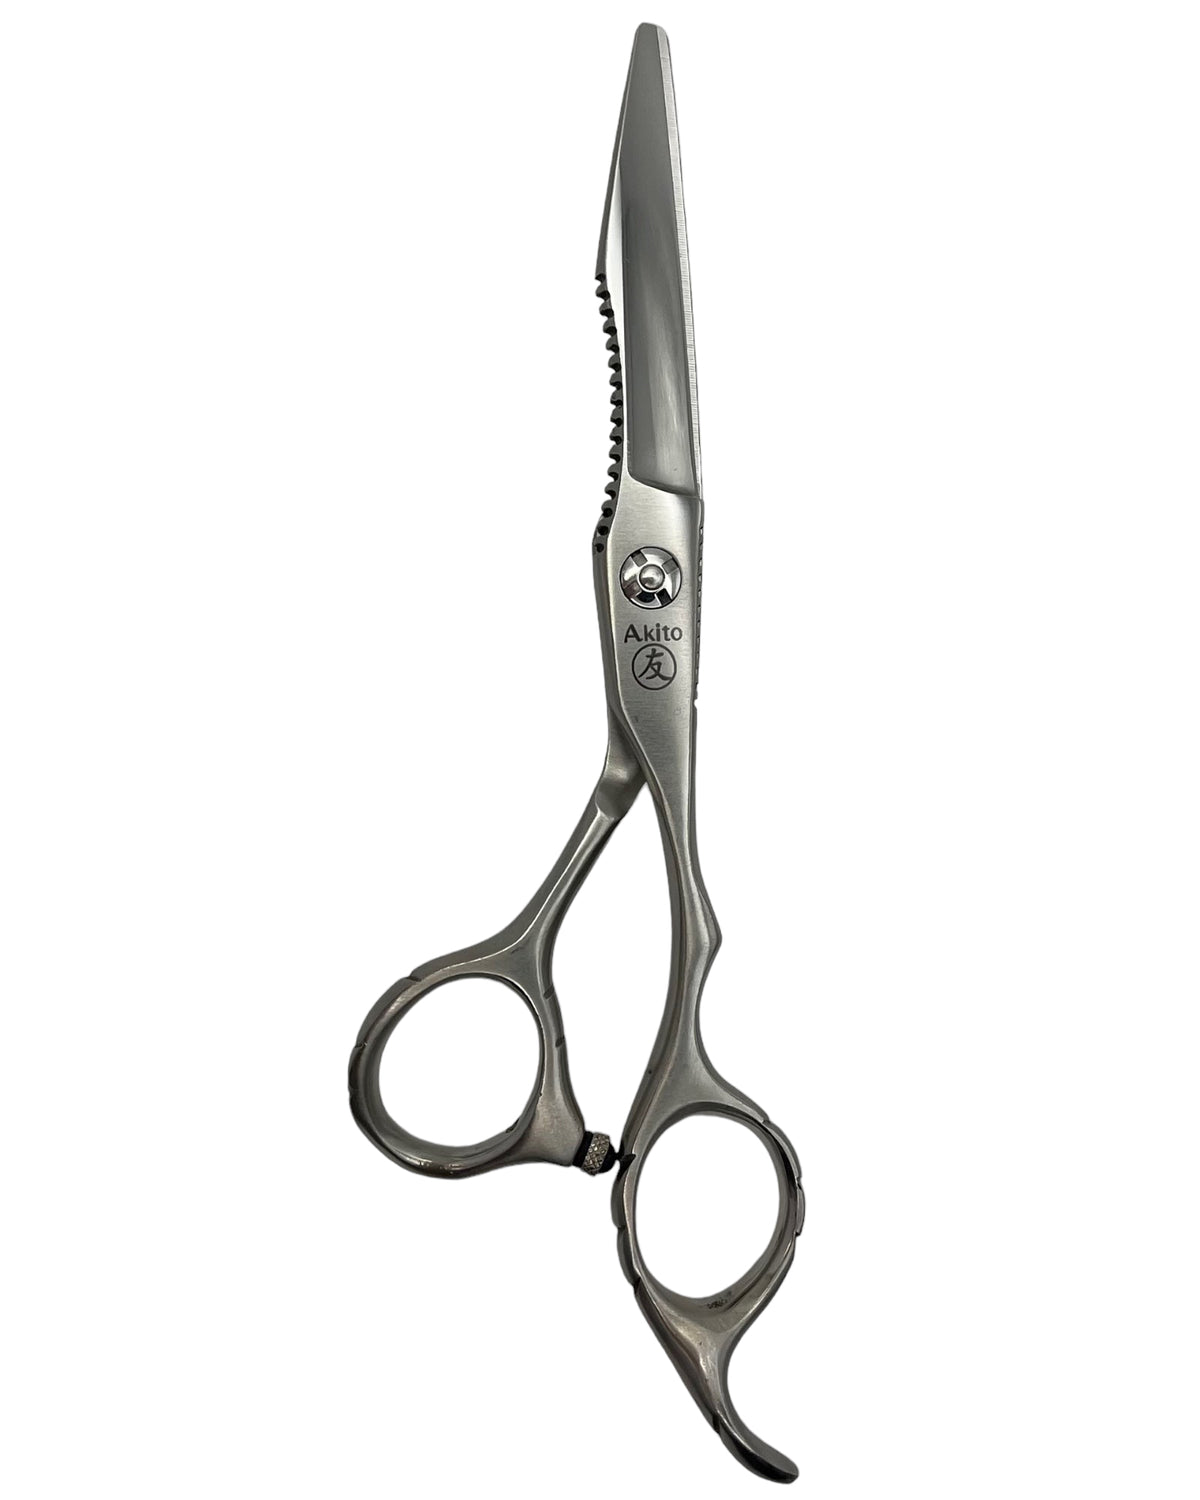 X-5 silver barber scissors